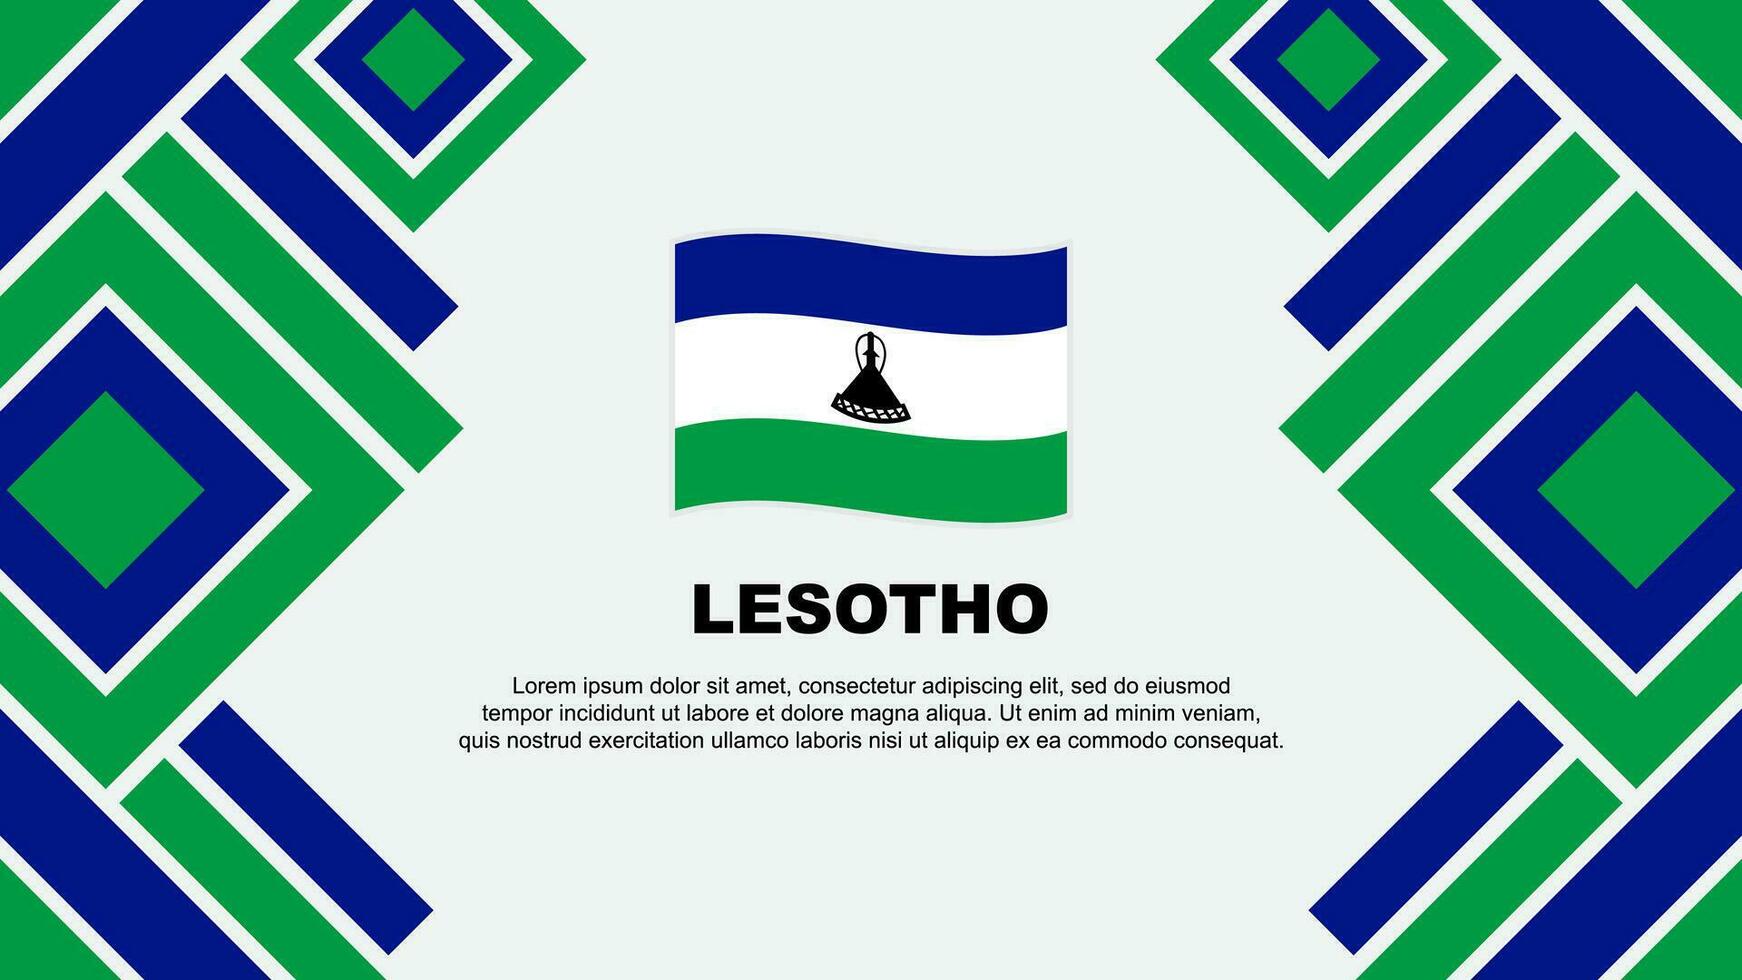 Lesotho Flag Abstract Background Design Template. Lesotho Independence Day Banner Wallpaper Vector Illustration. Lesotho